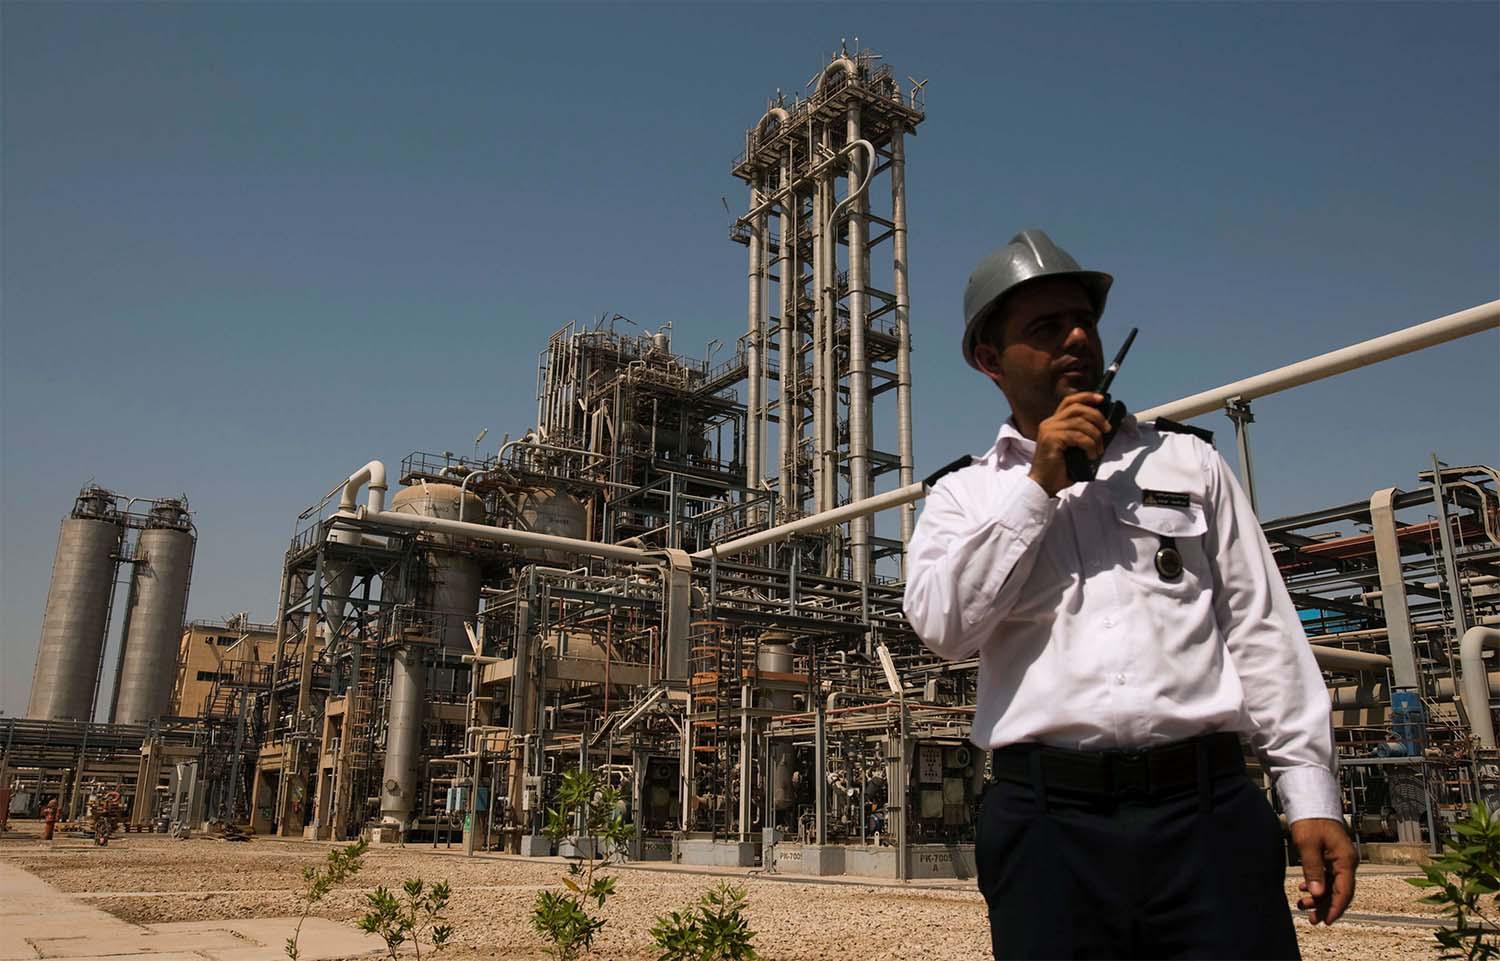 Mahshahr petrochemical plant in Khuzestan province